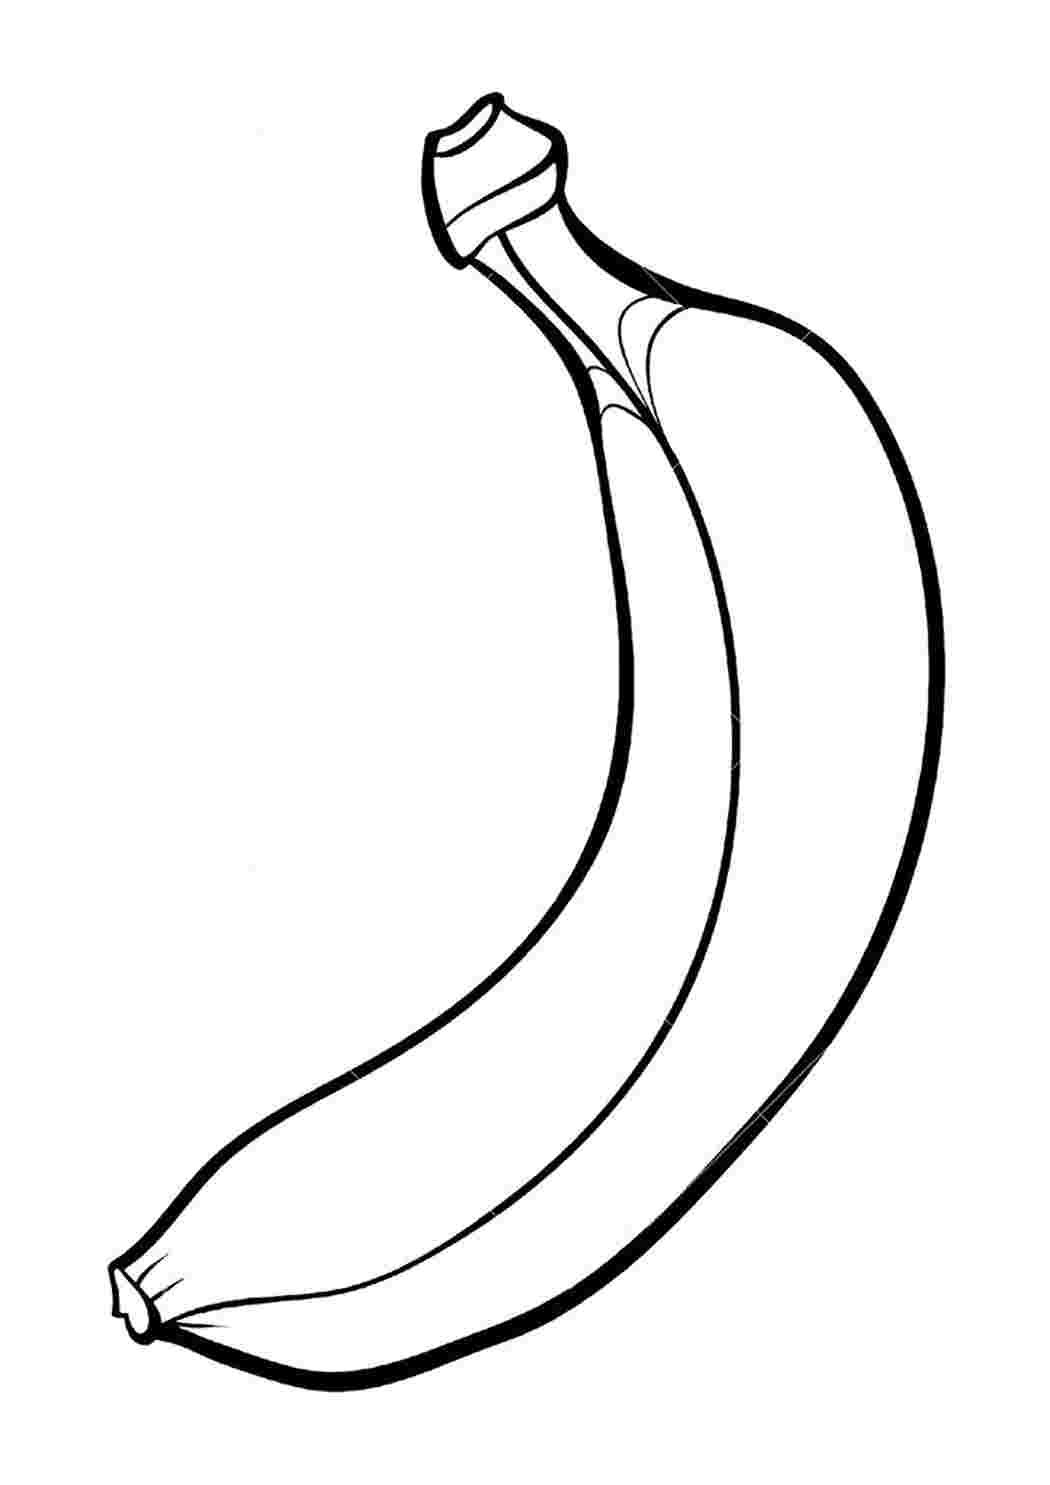 Банан контур